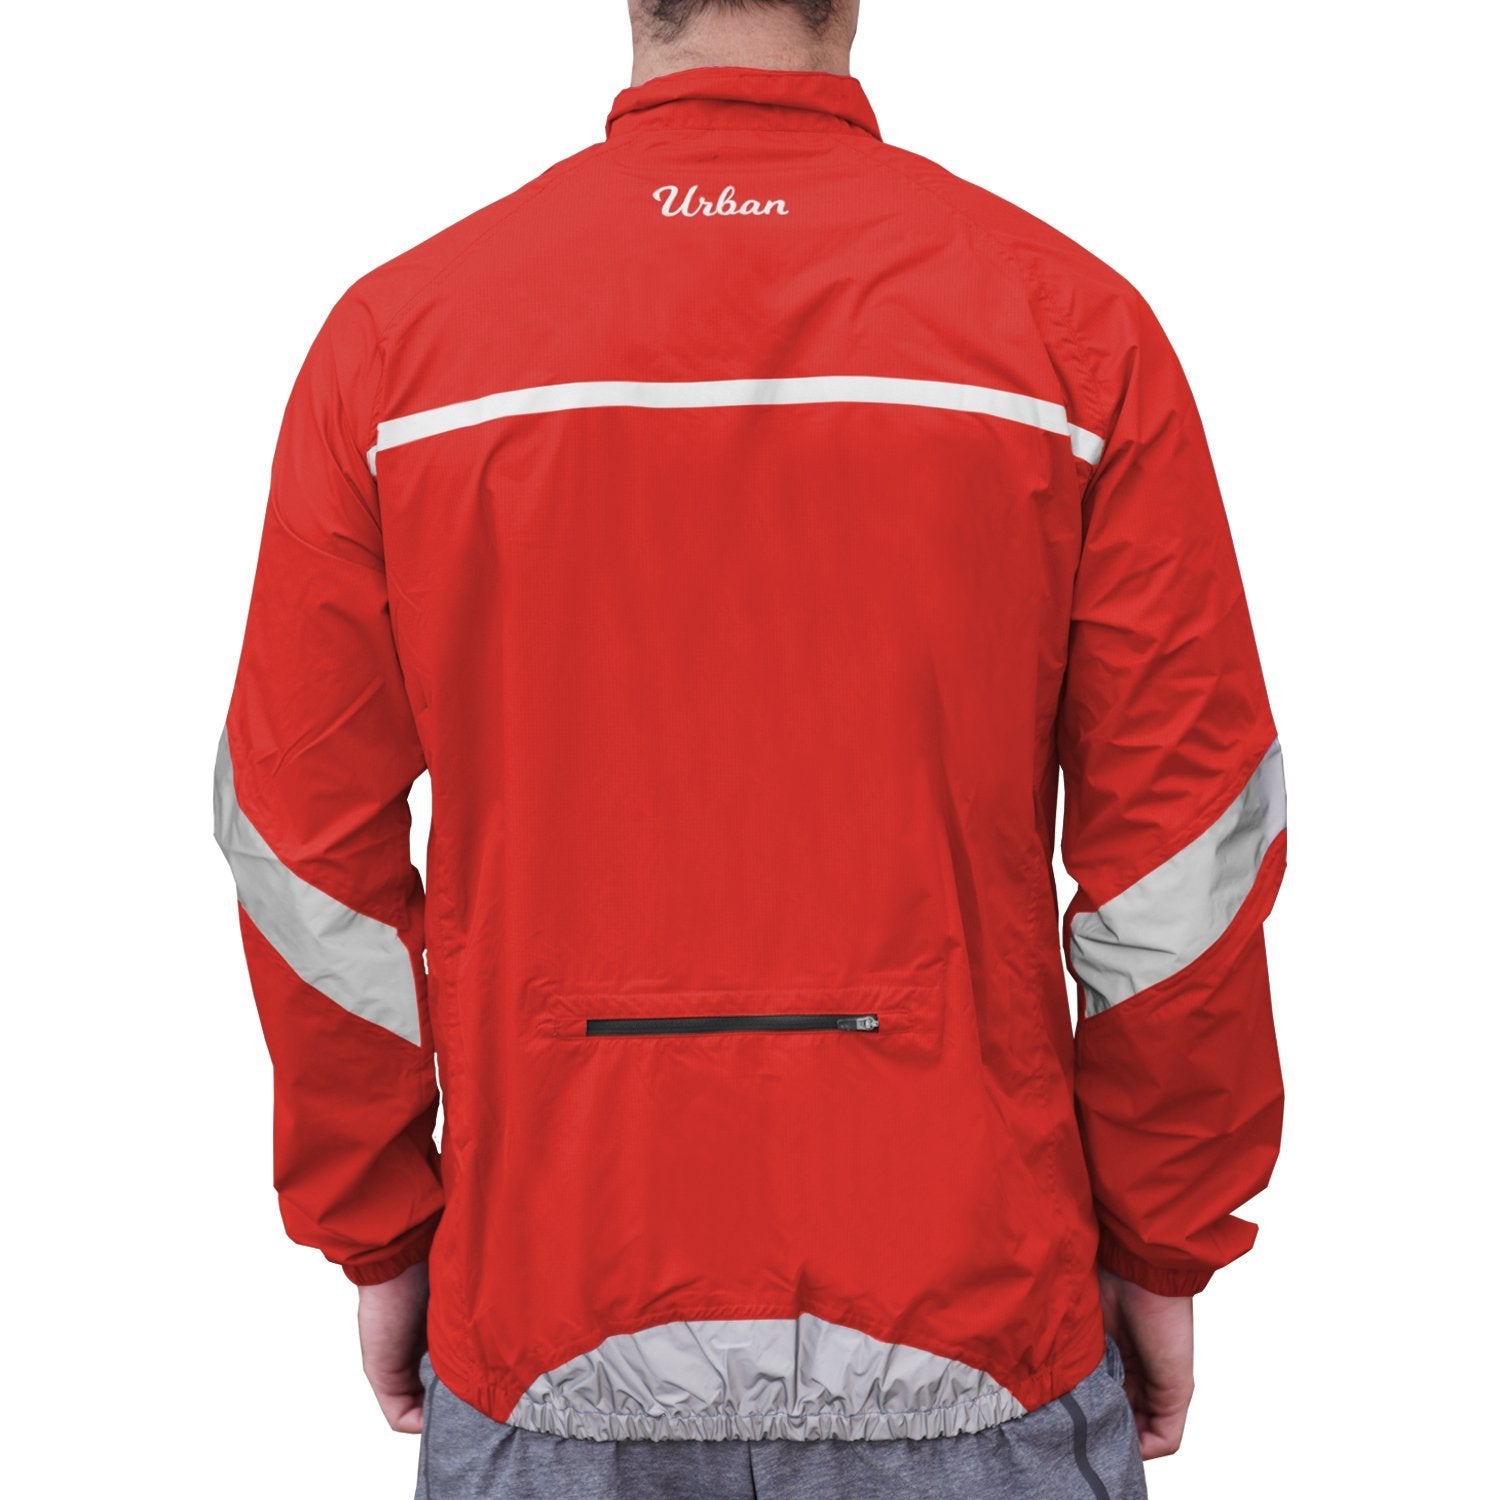 Urban Windproof & Waterproof Commuters Cycling Jacket - Orange - Urban  Cycling Apparel